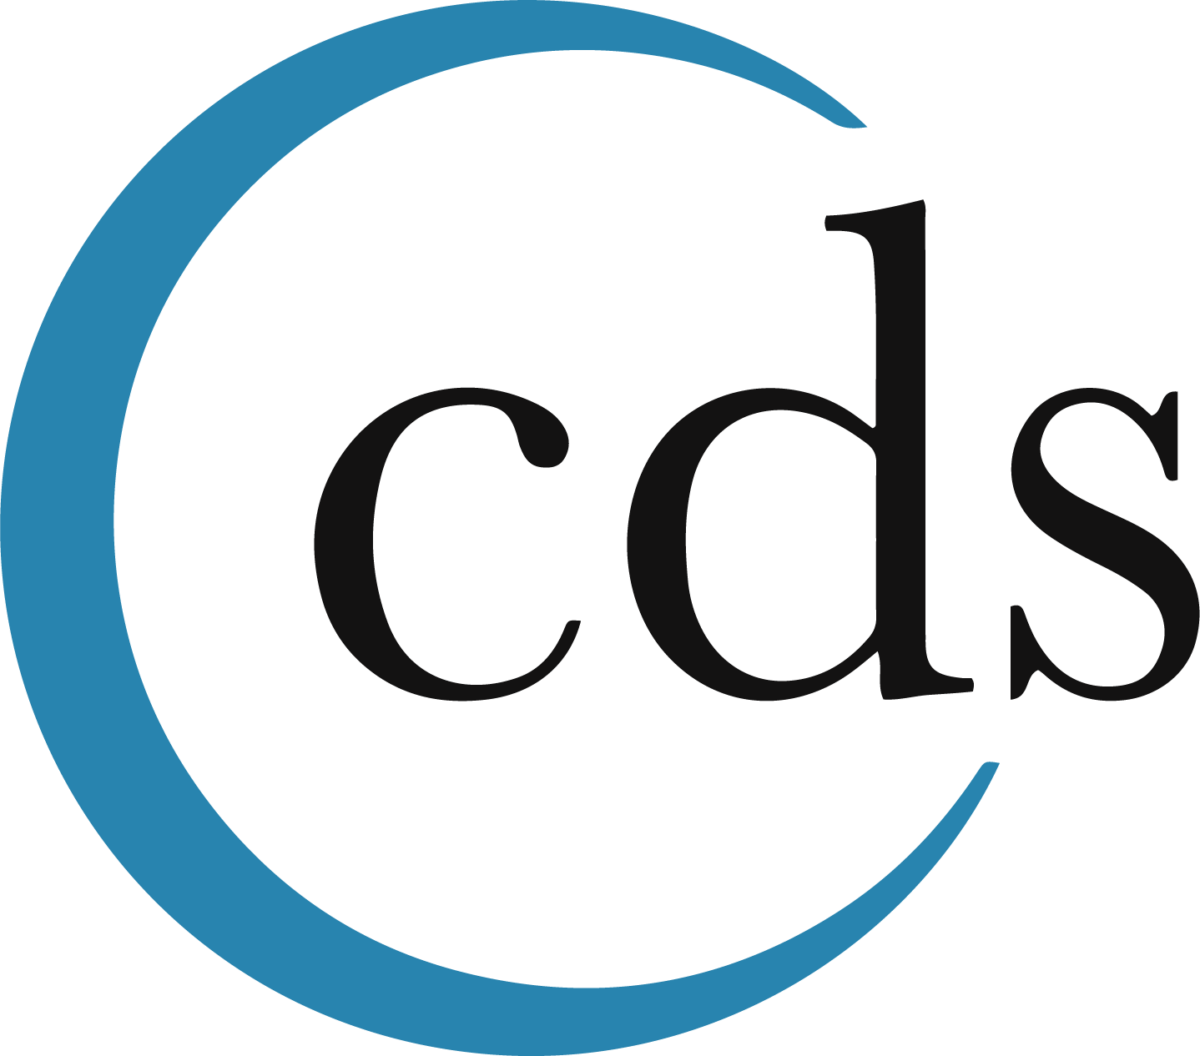 CDS graphic logo.